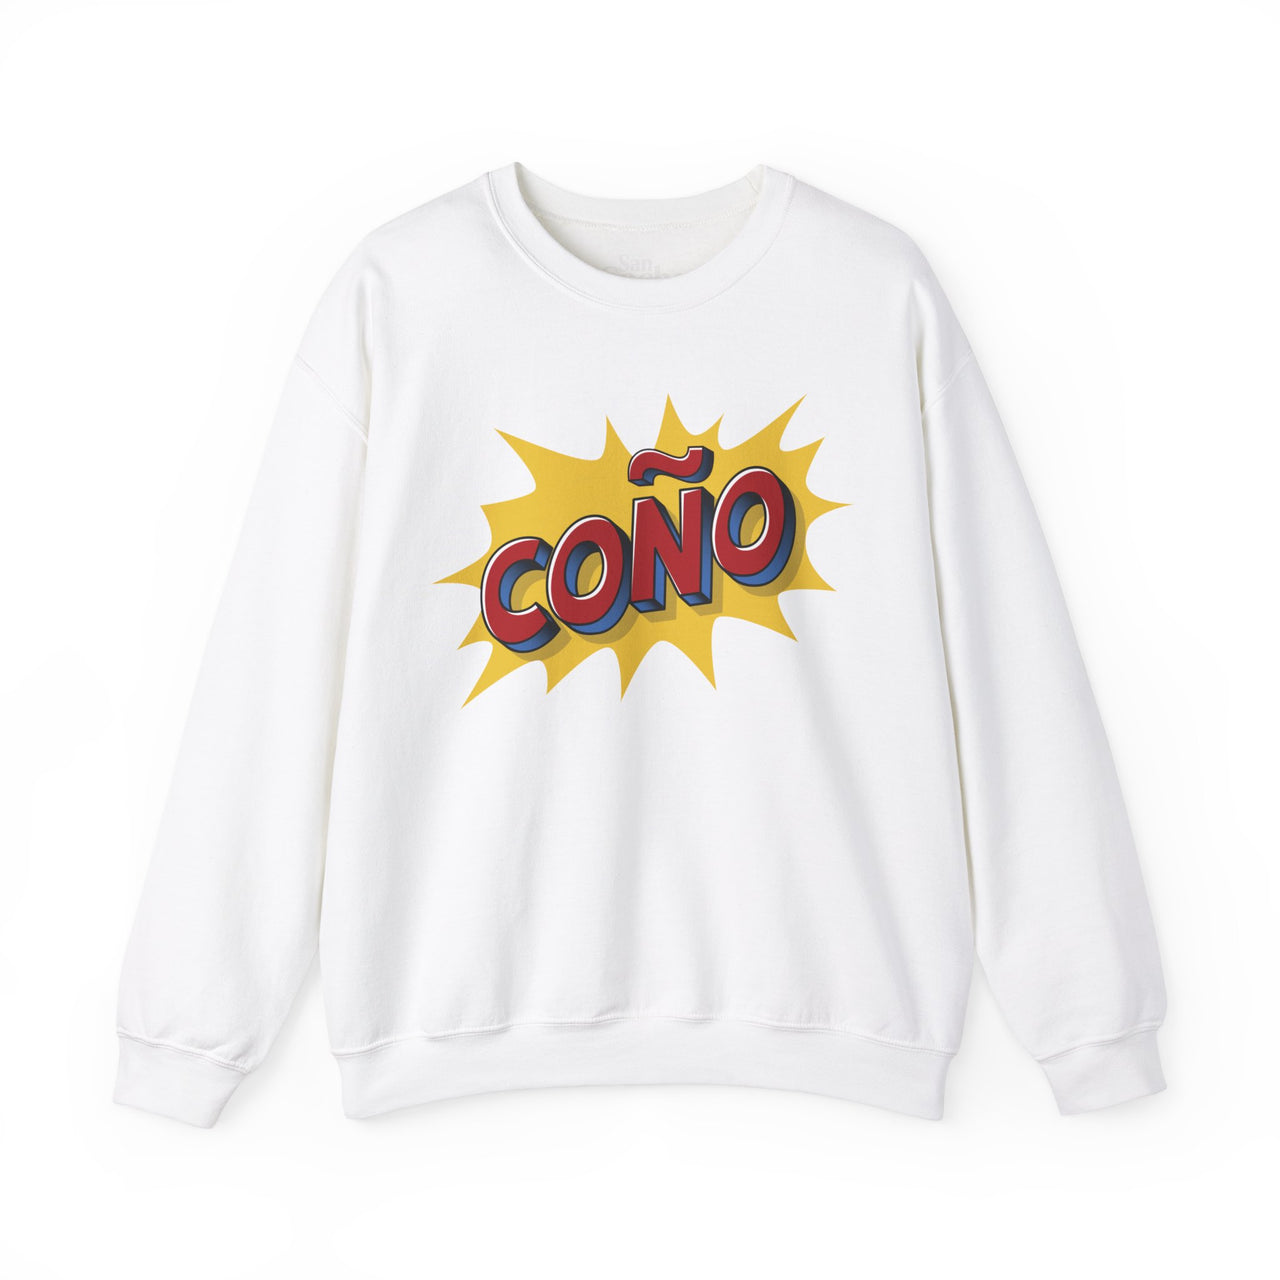 Coño Graphic Oversized Sweatshirt | Bold Latin Pride & Statement Wear